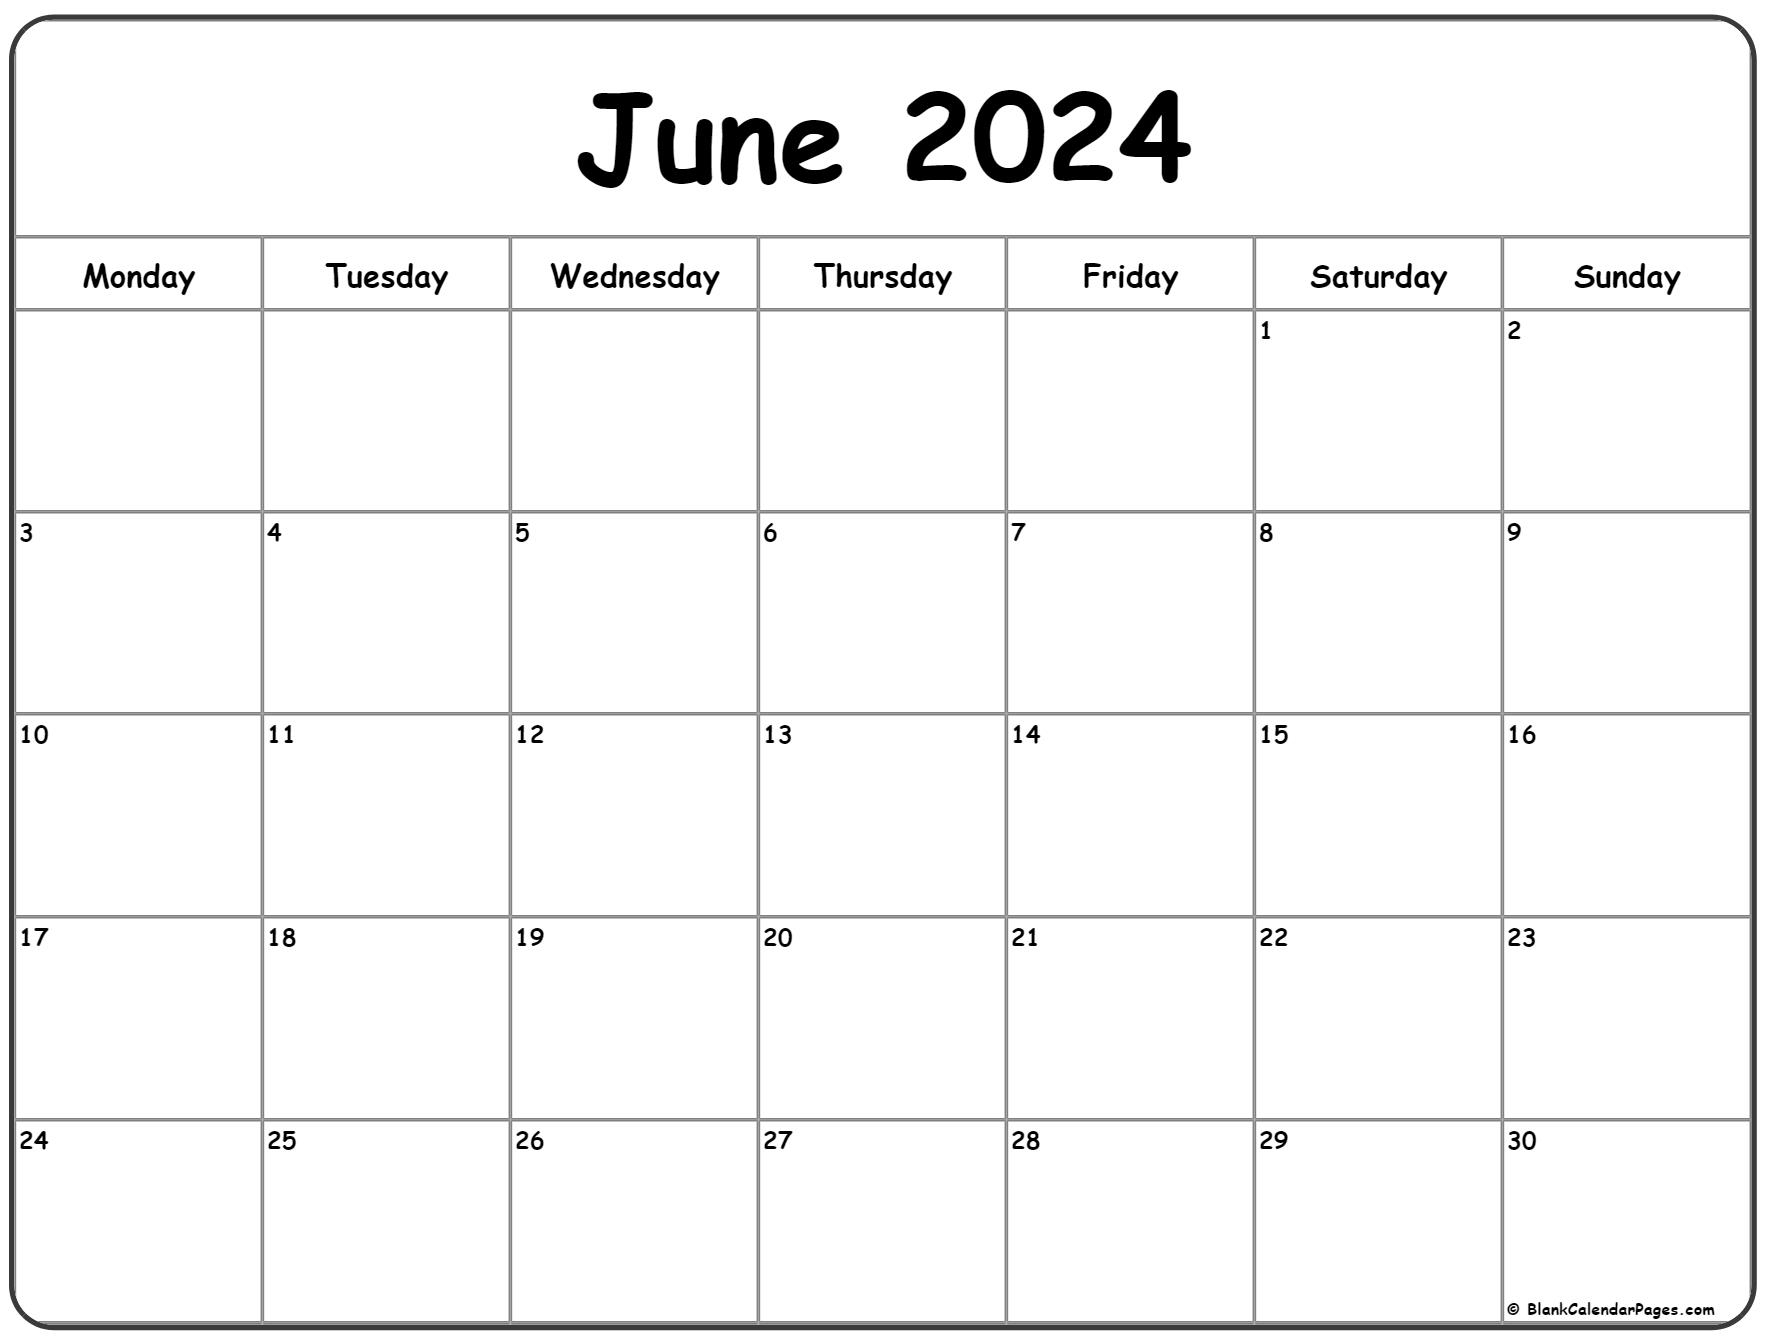 Calendar Of June 2021 June 2021 Monday Calendar | Monday to Sunday